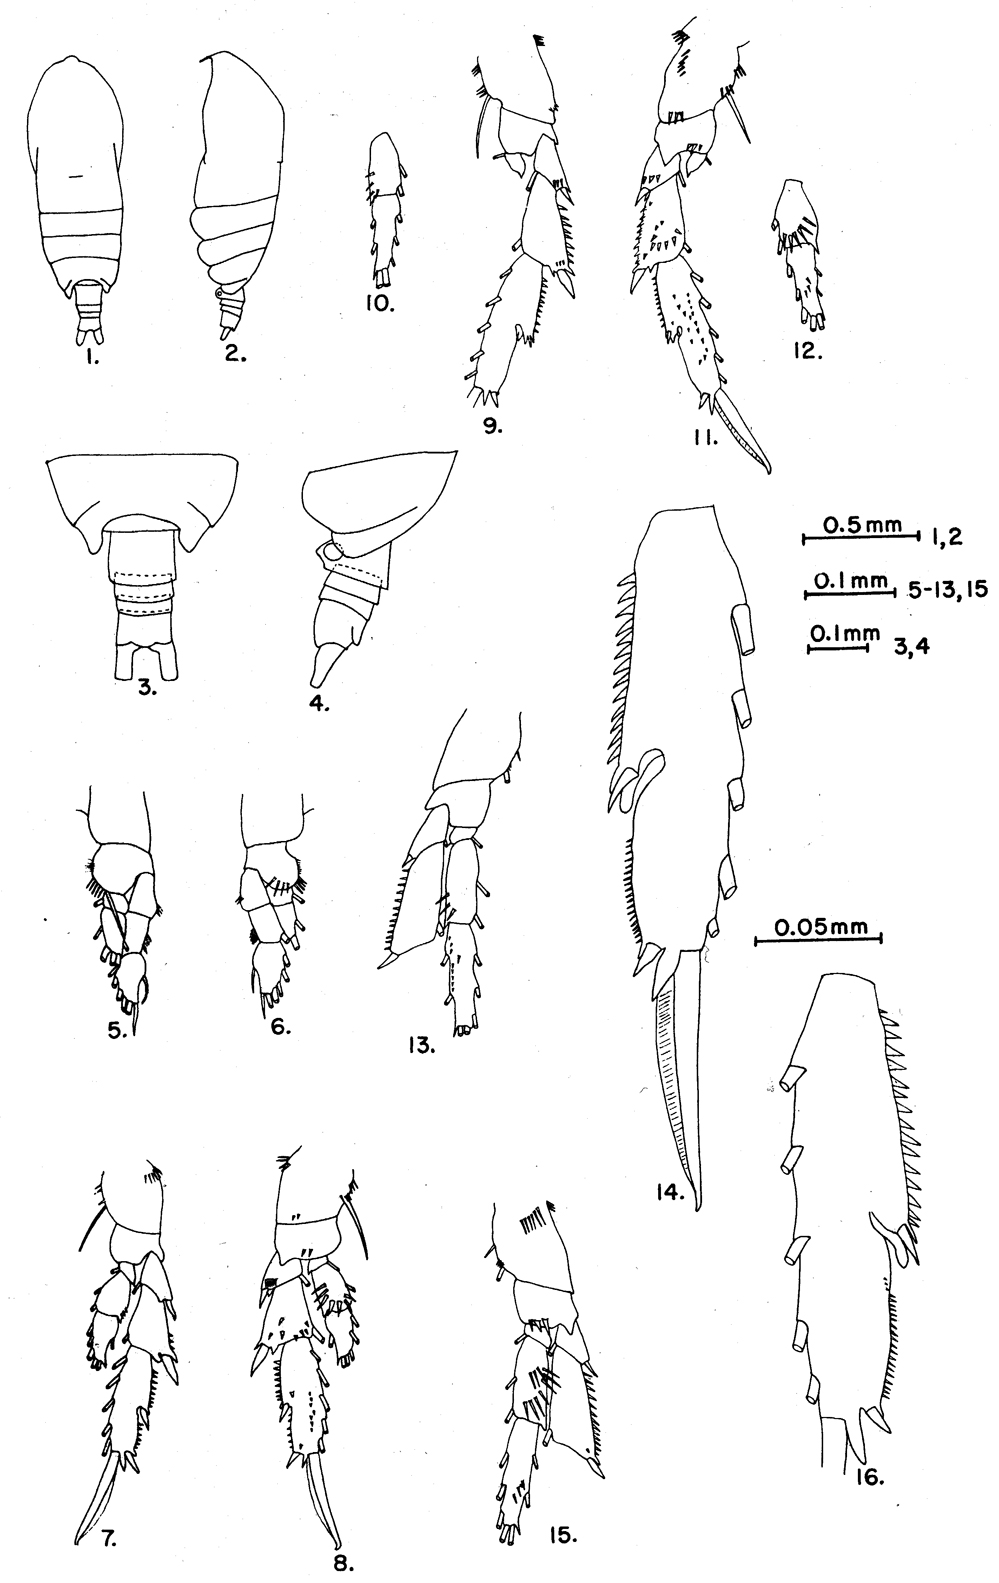 Species Acrocalanus longicornis - Plate 12 of morphological figures